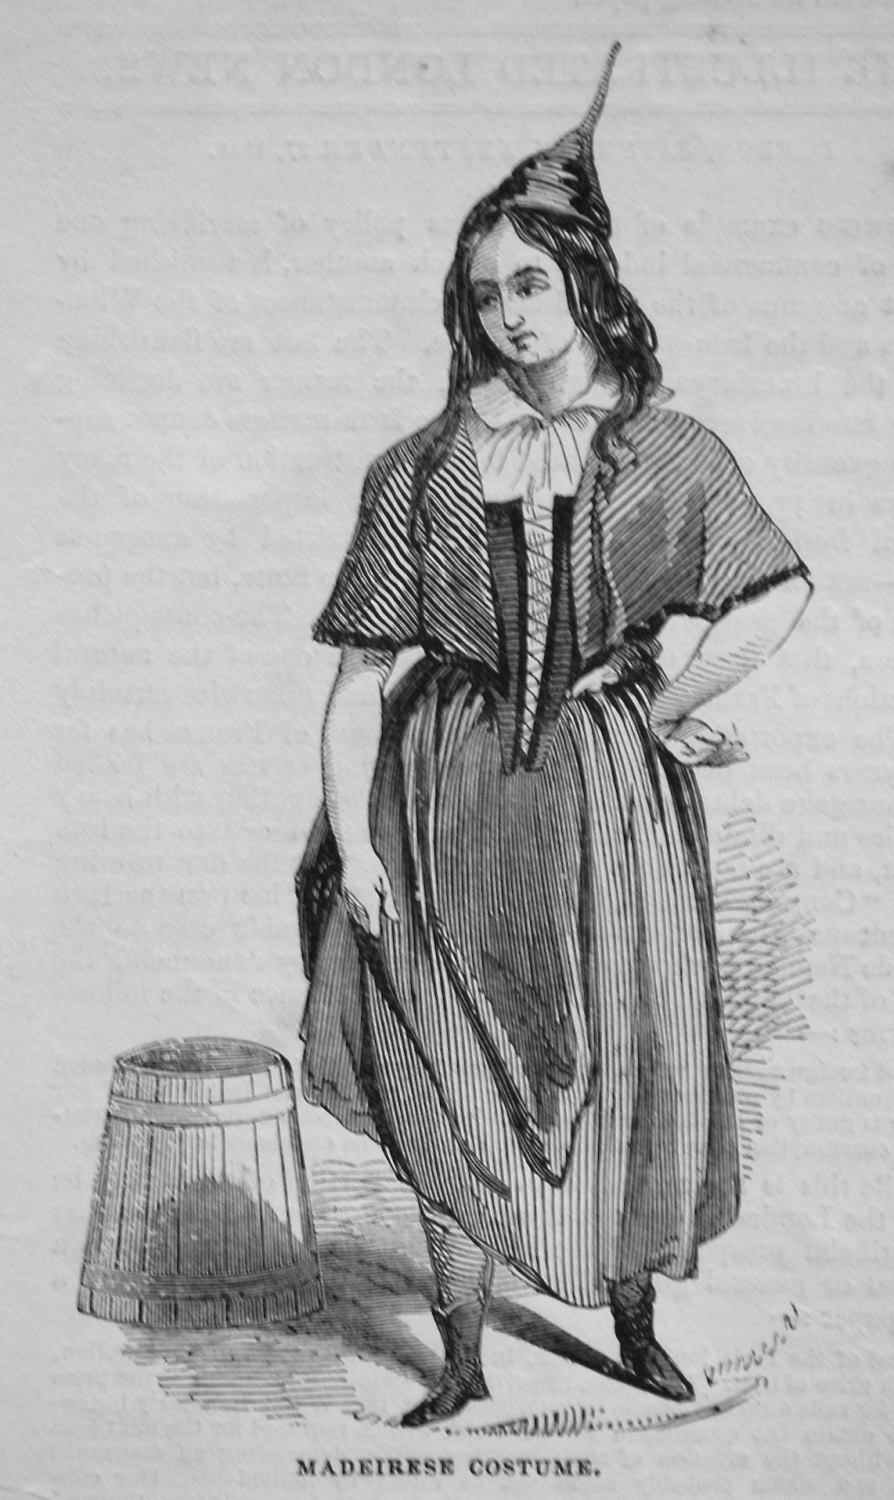 Madeirese Costume. 1845